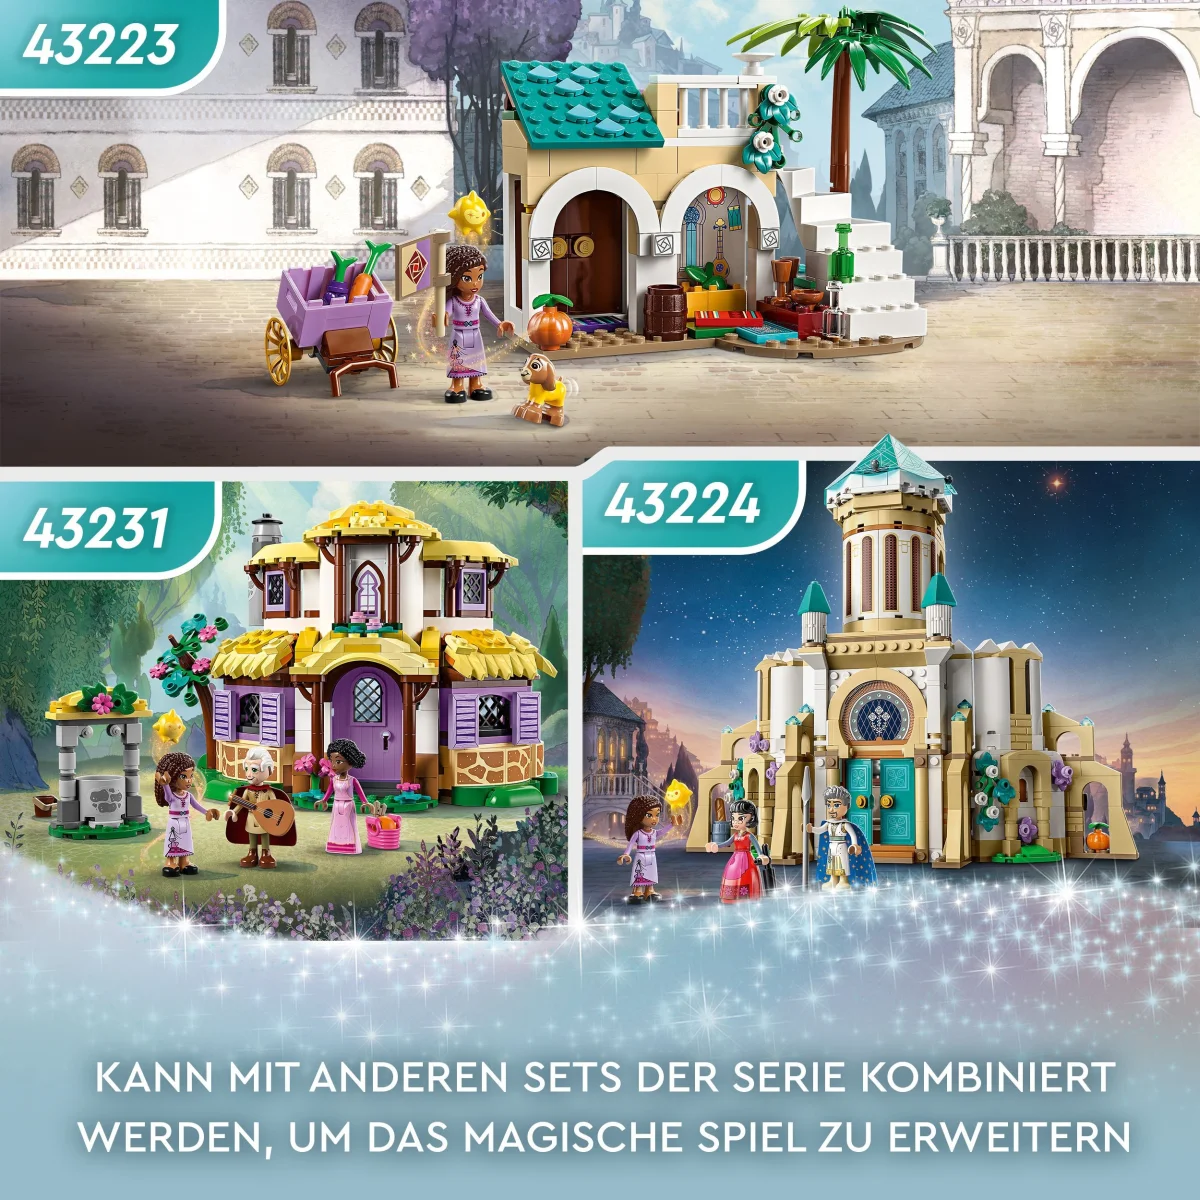 LEGO® Disney Wish König Magnificos Schloss 43224